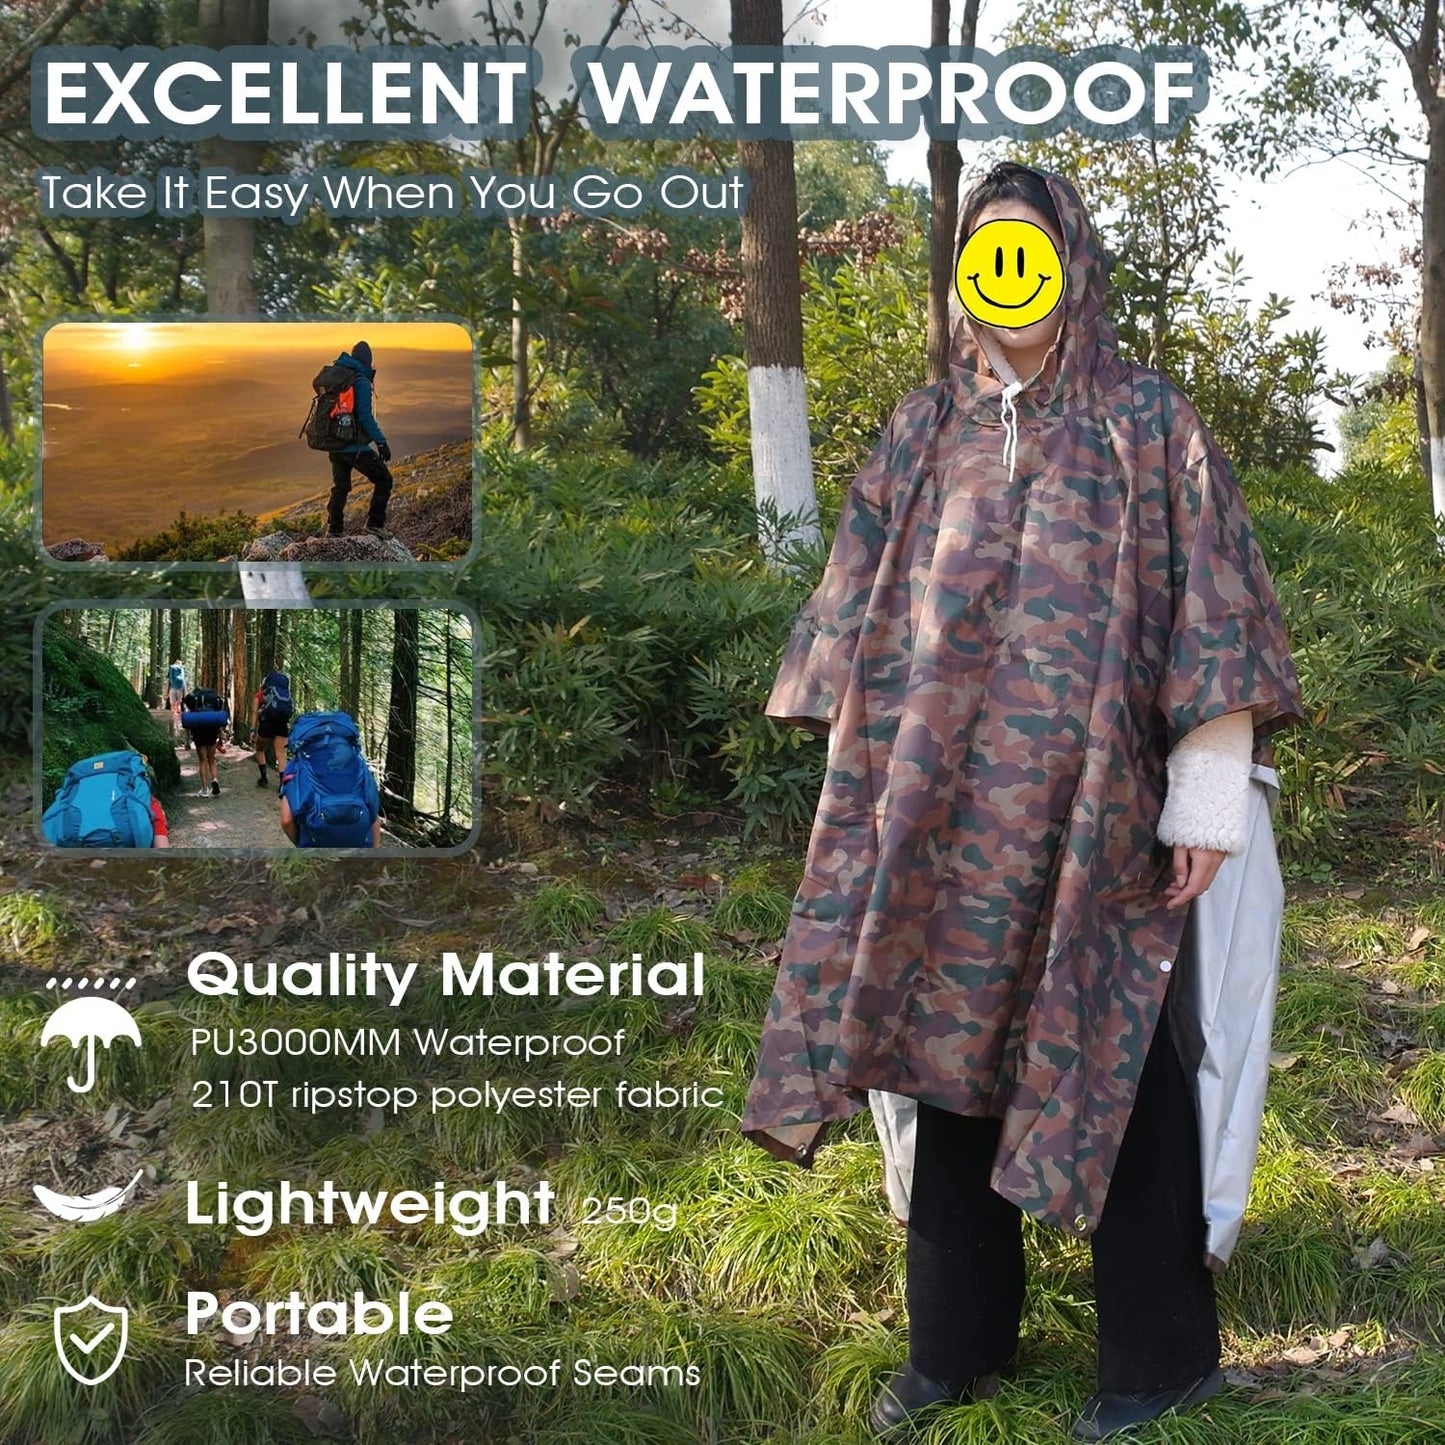 QIANQUHUI Waterproof Rain Poncho Lightweight Reusable Hiking Hooded Coat Jacket Unisex Raincoat for Hiking Camping Emergency